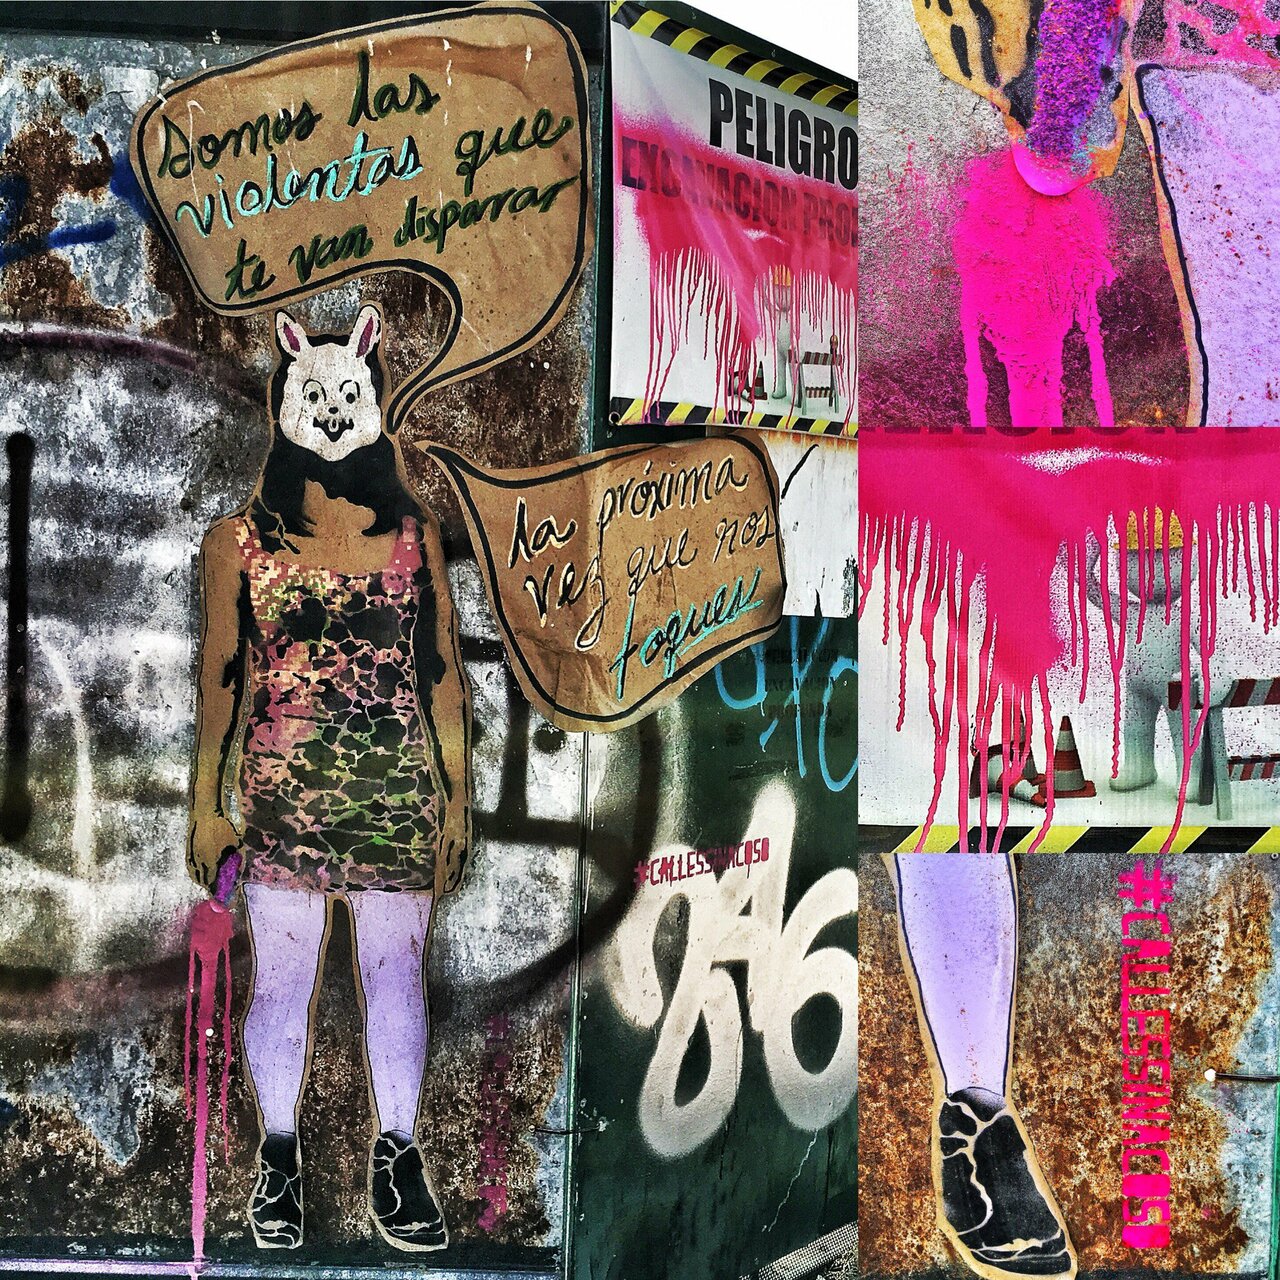 RT @rexiste: #NuestraVenganzaEsSerFelices arte urbano contra el acoso callejero con @LasHijasdeV #RexisteMX #StreetArt #Graffiti https://t.co/qLE8q4GNxs